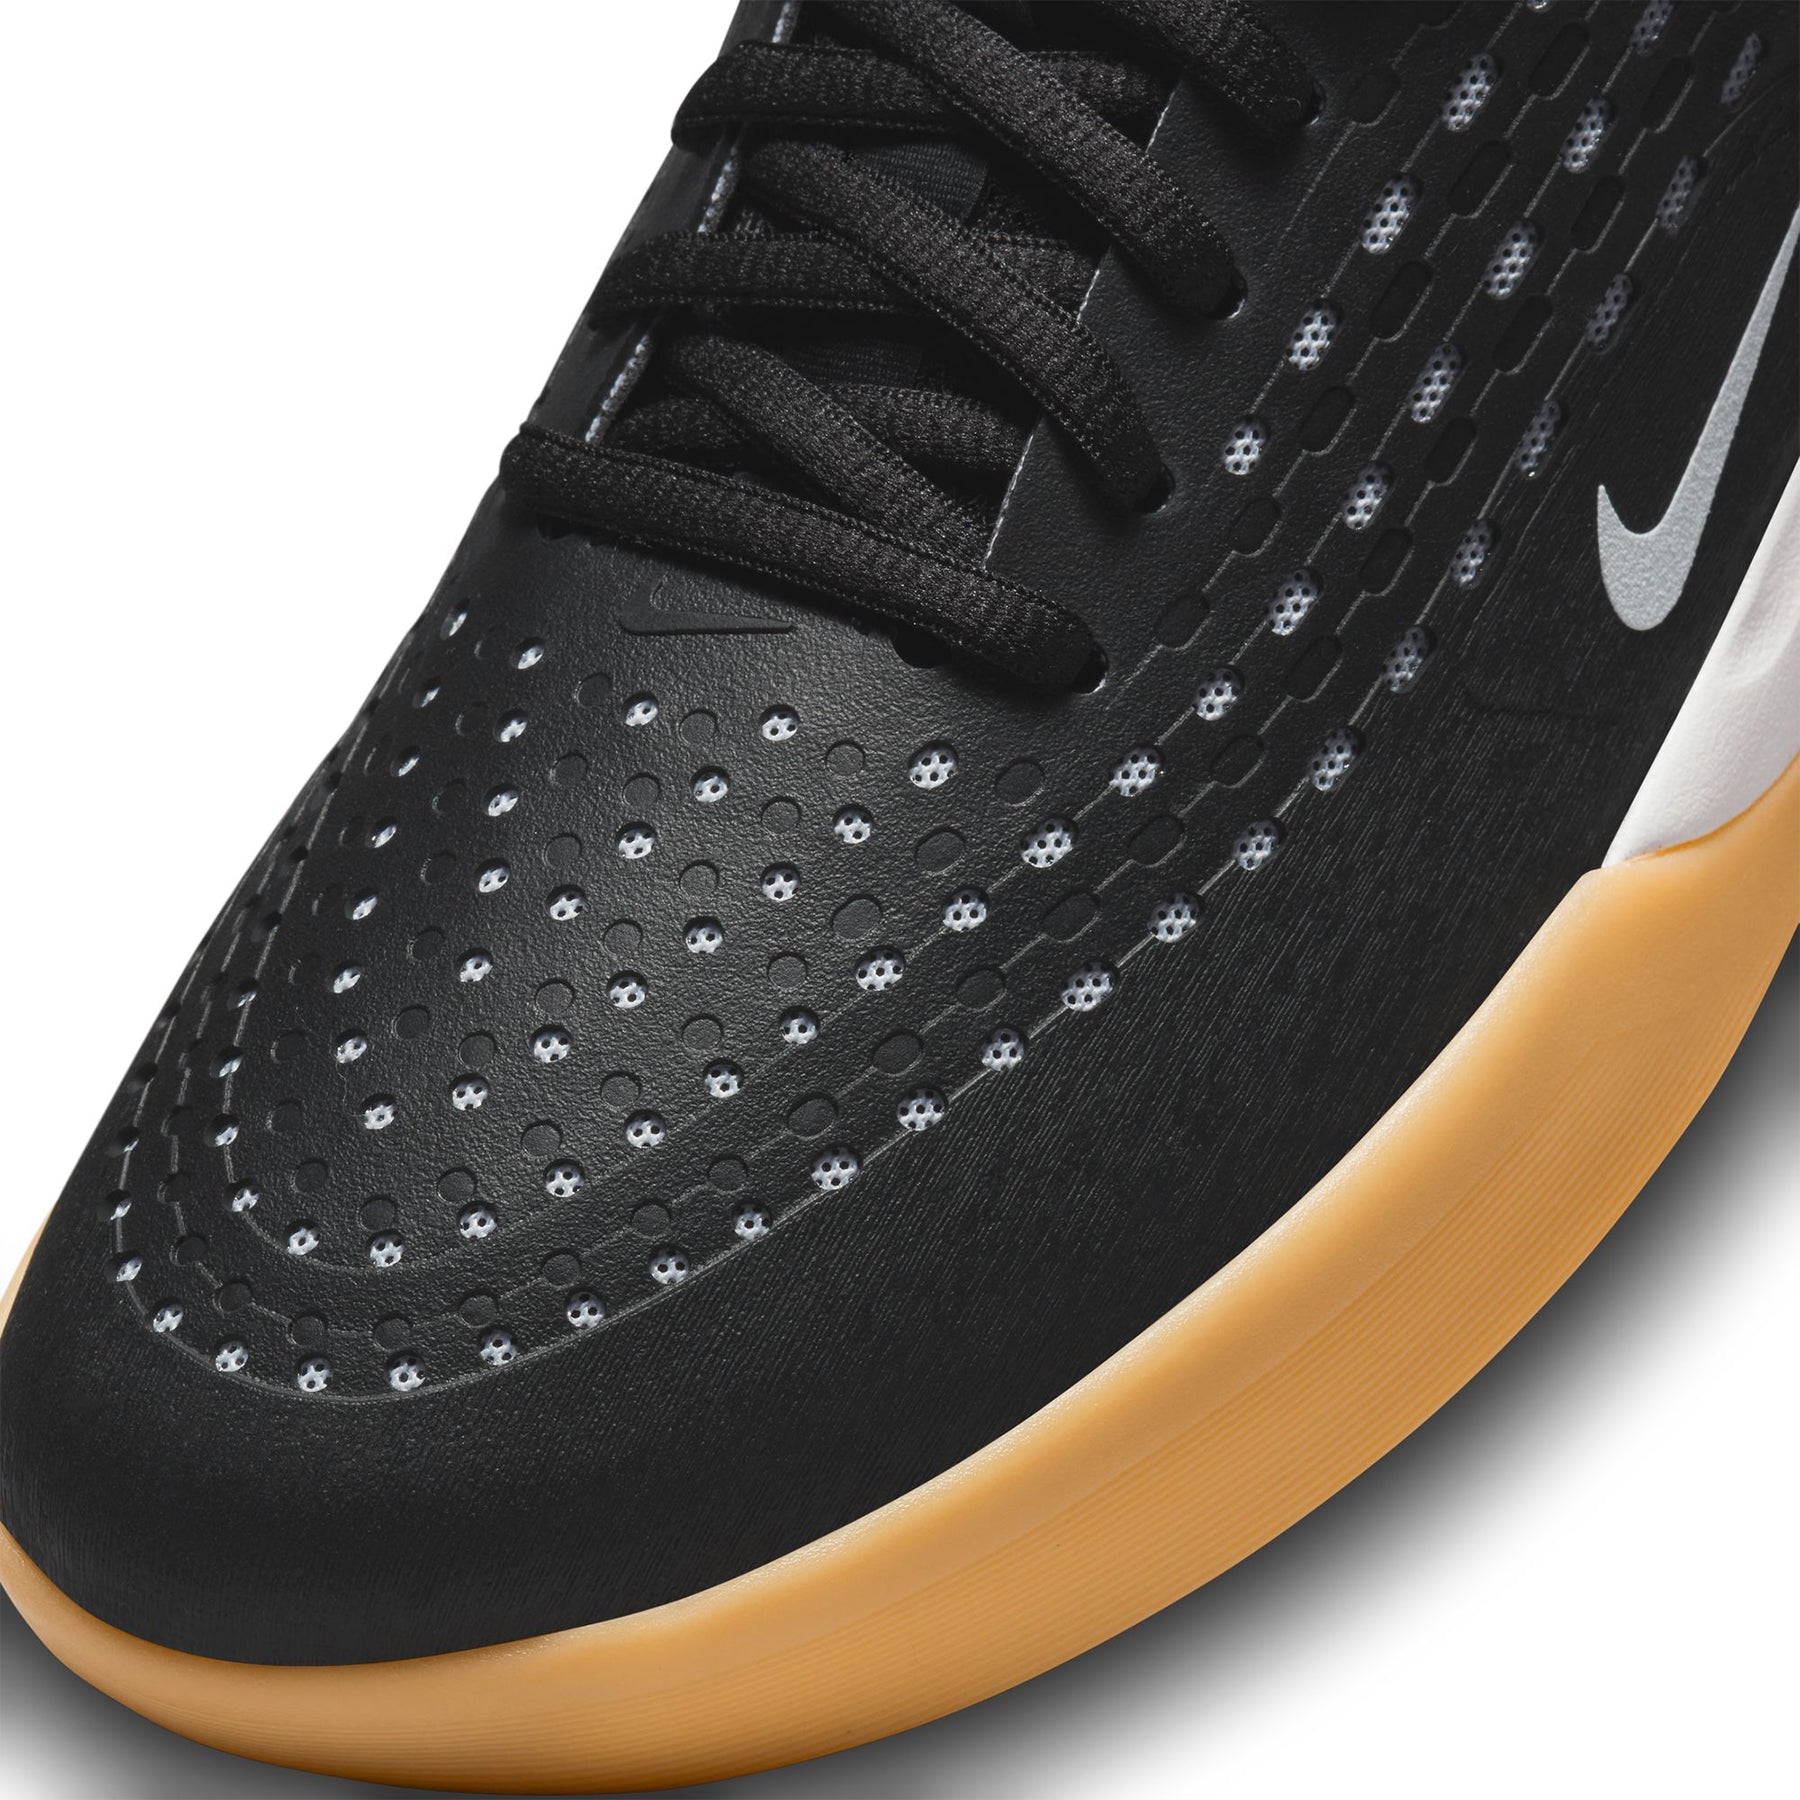 Nike SB - Nyjah 3 Zoom - Black/White